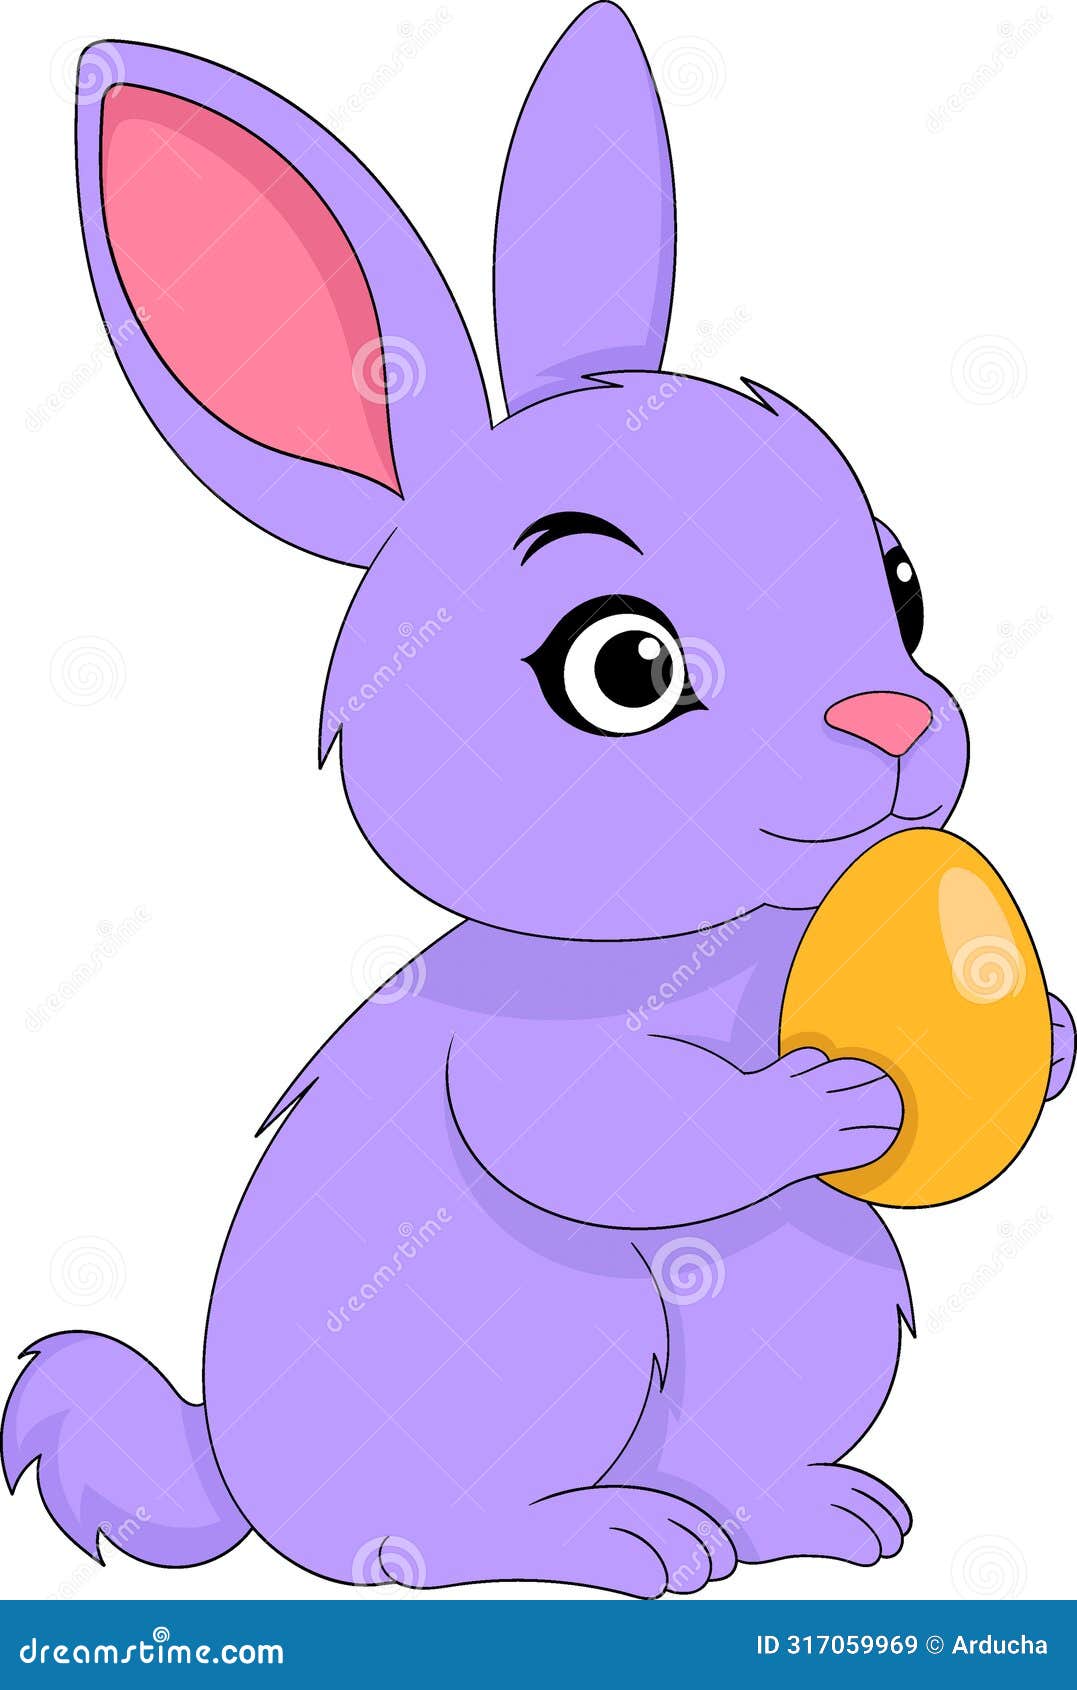 easter doodle cartoon , purple rabbit carrying eggs celebrating catholics